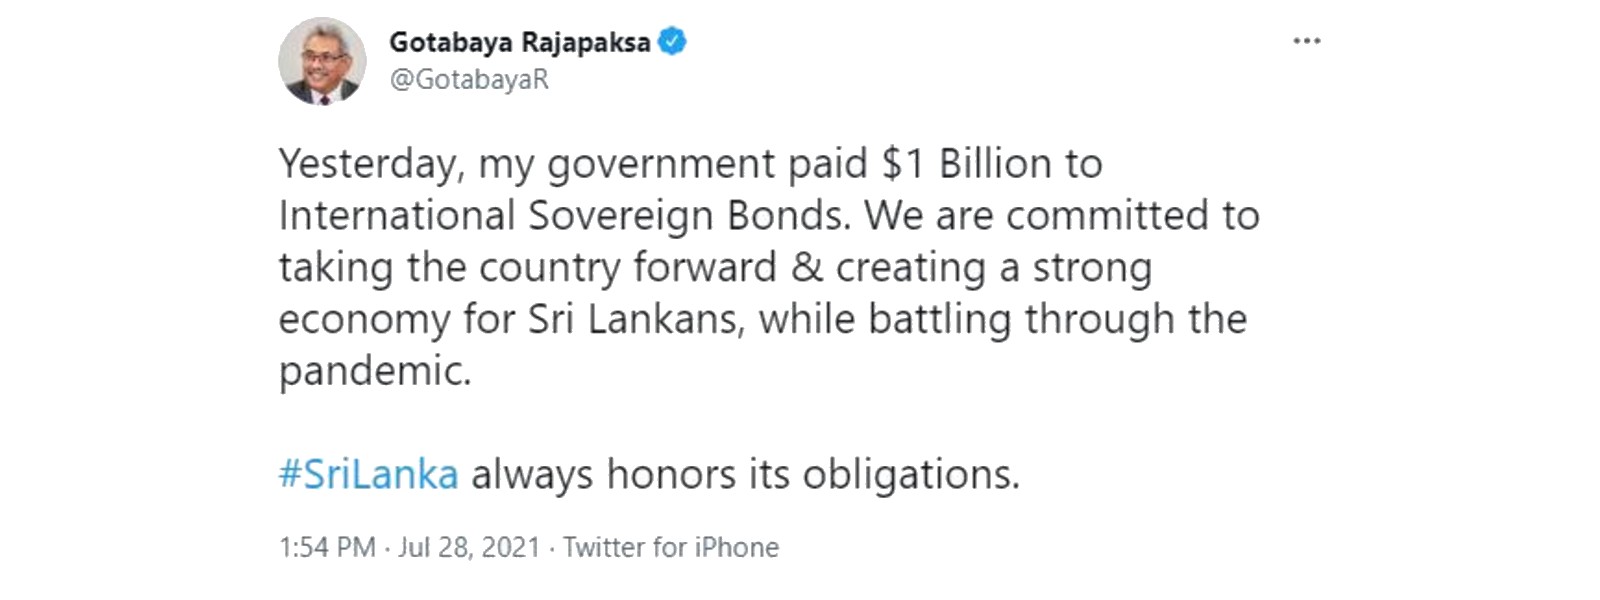 Sri Lanka always honors its obligations, tweets President